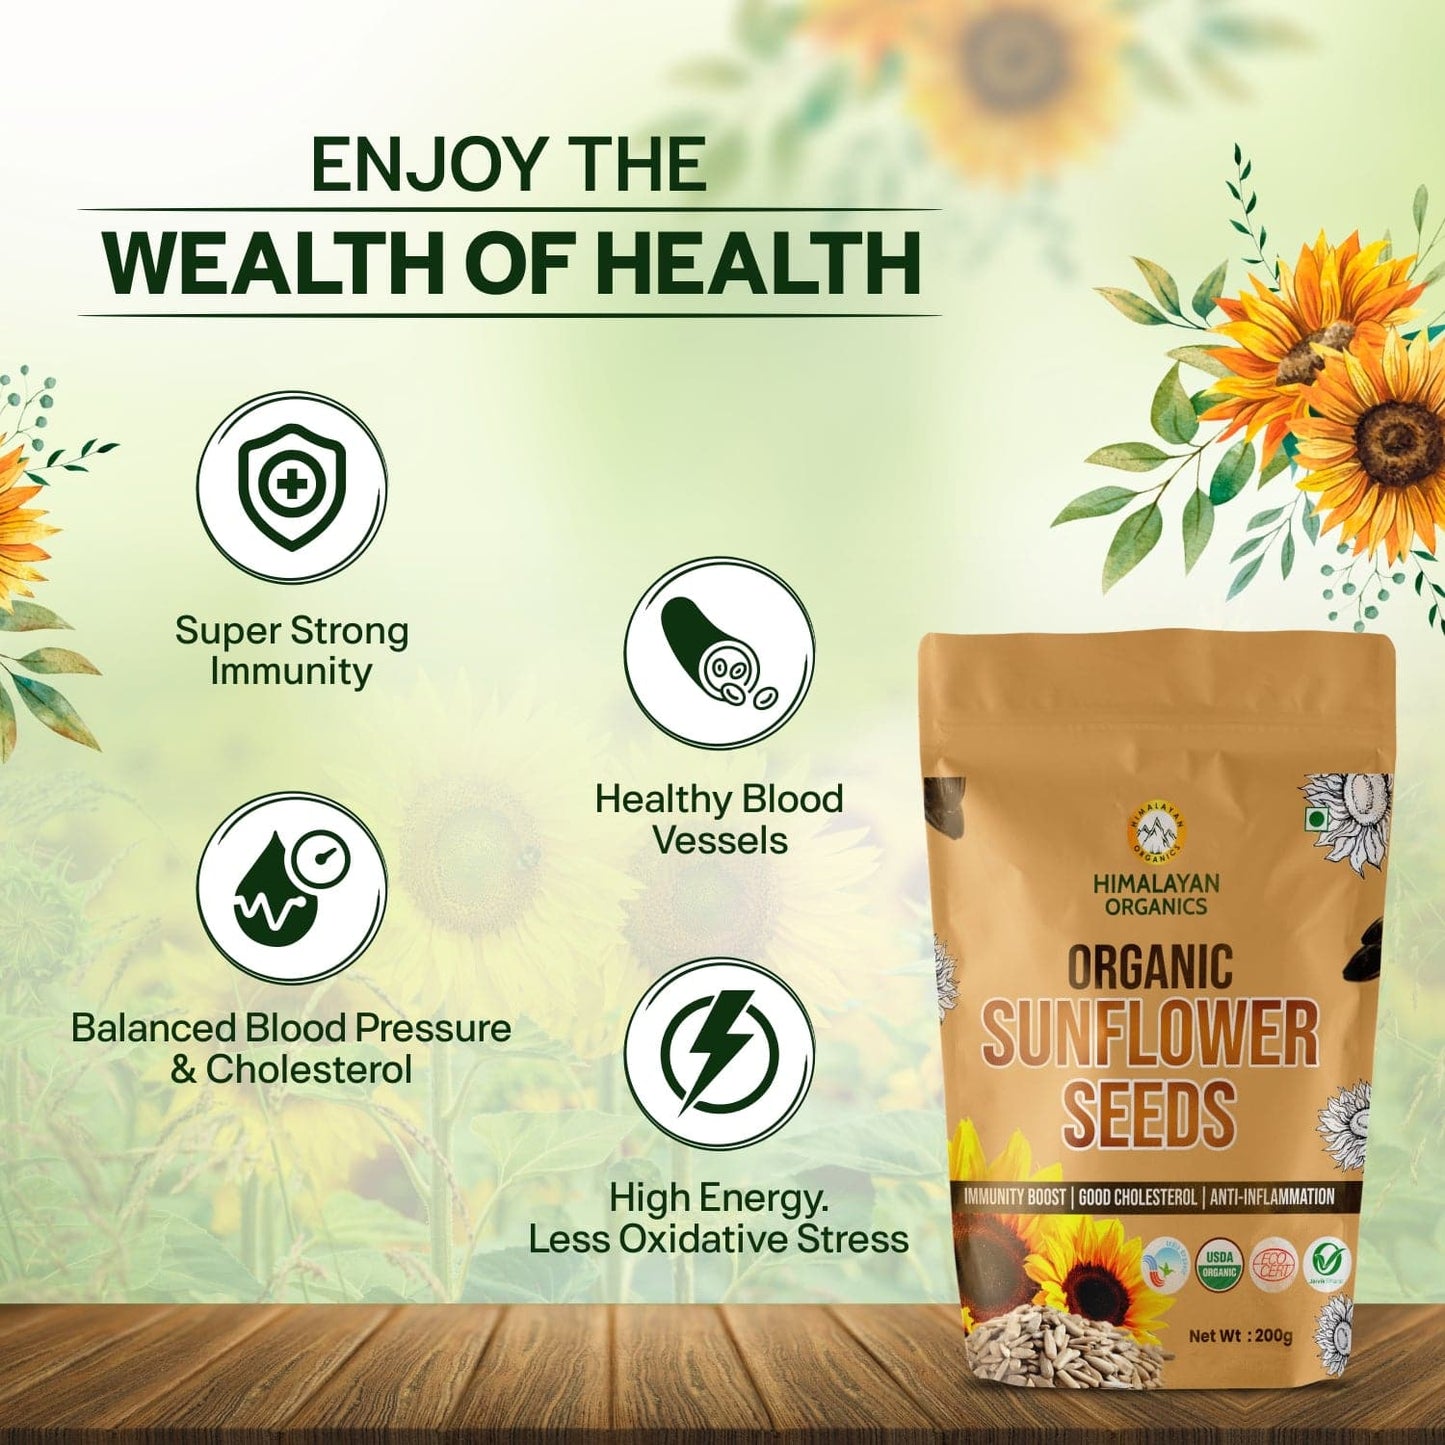 Himalayan Organics Certified Organic Sunflower Seeds 200g